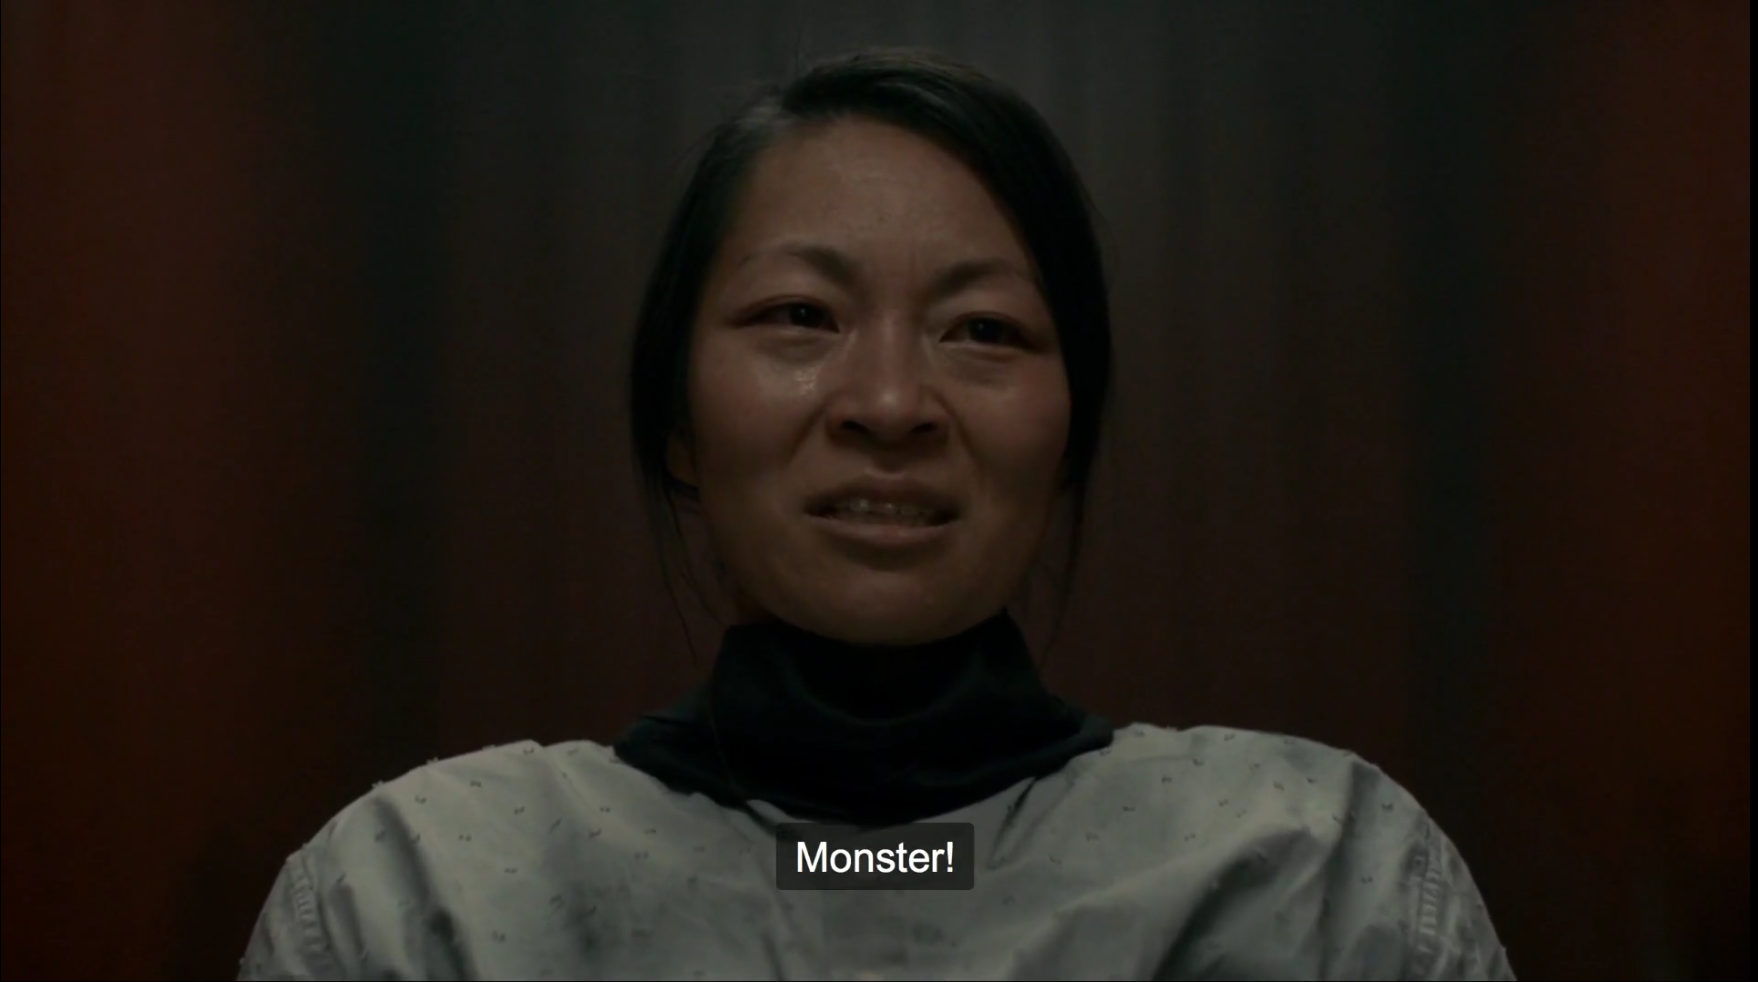 Jung Sun den Hollander as Jin (the “Ghost”) saying “Monster!”